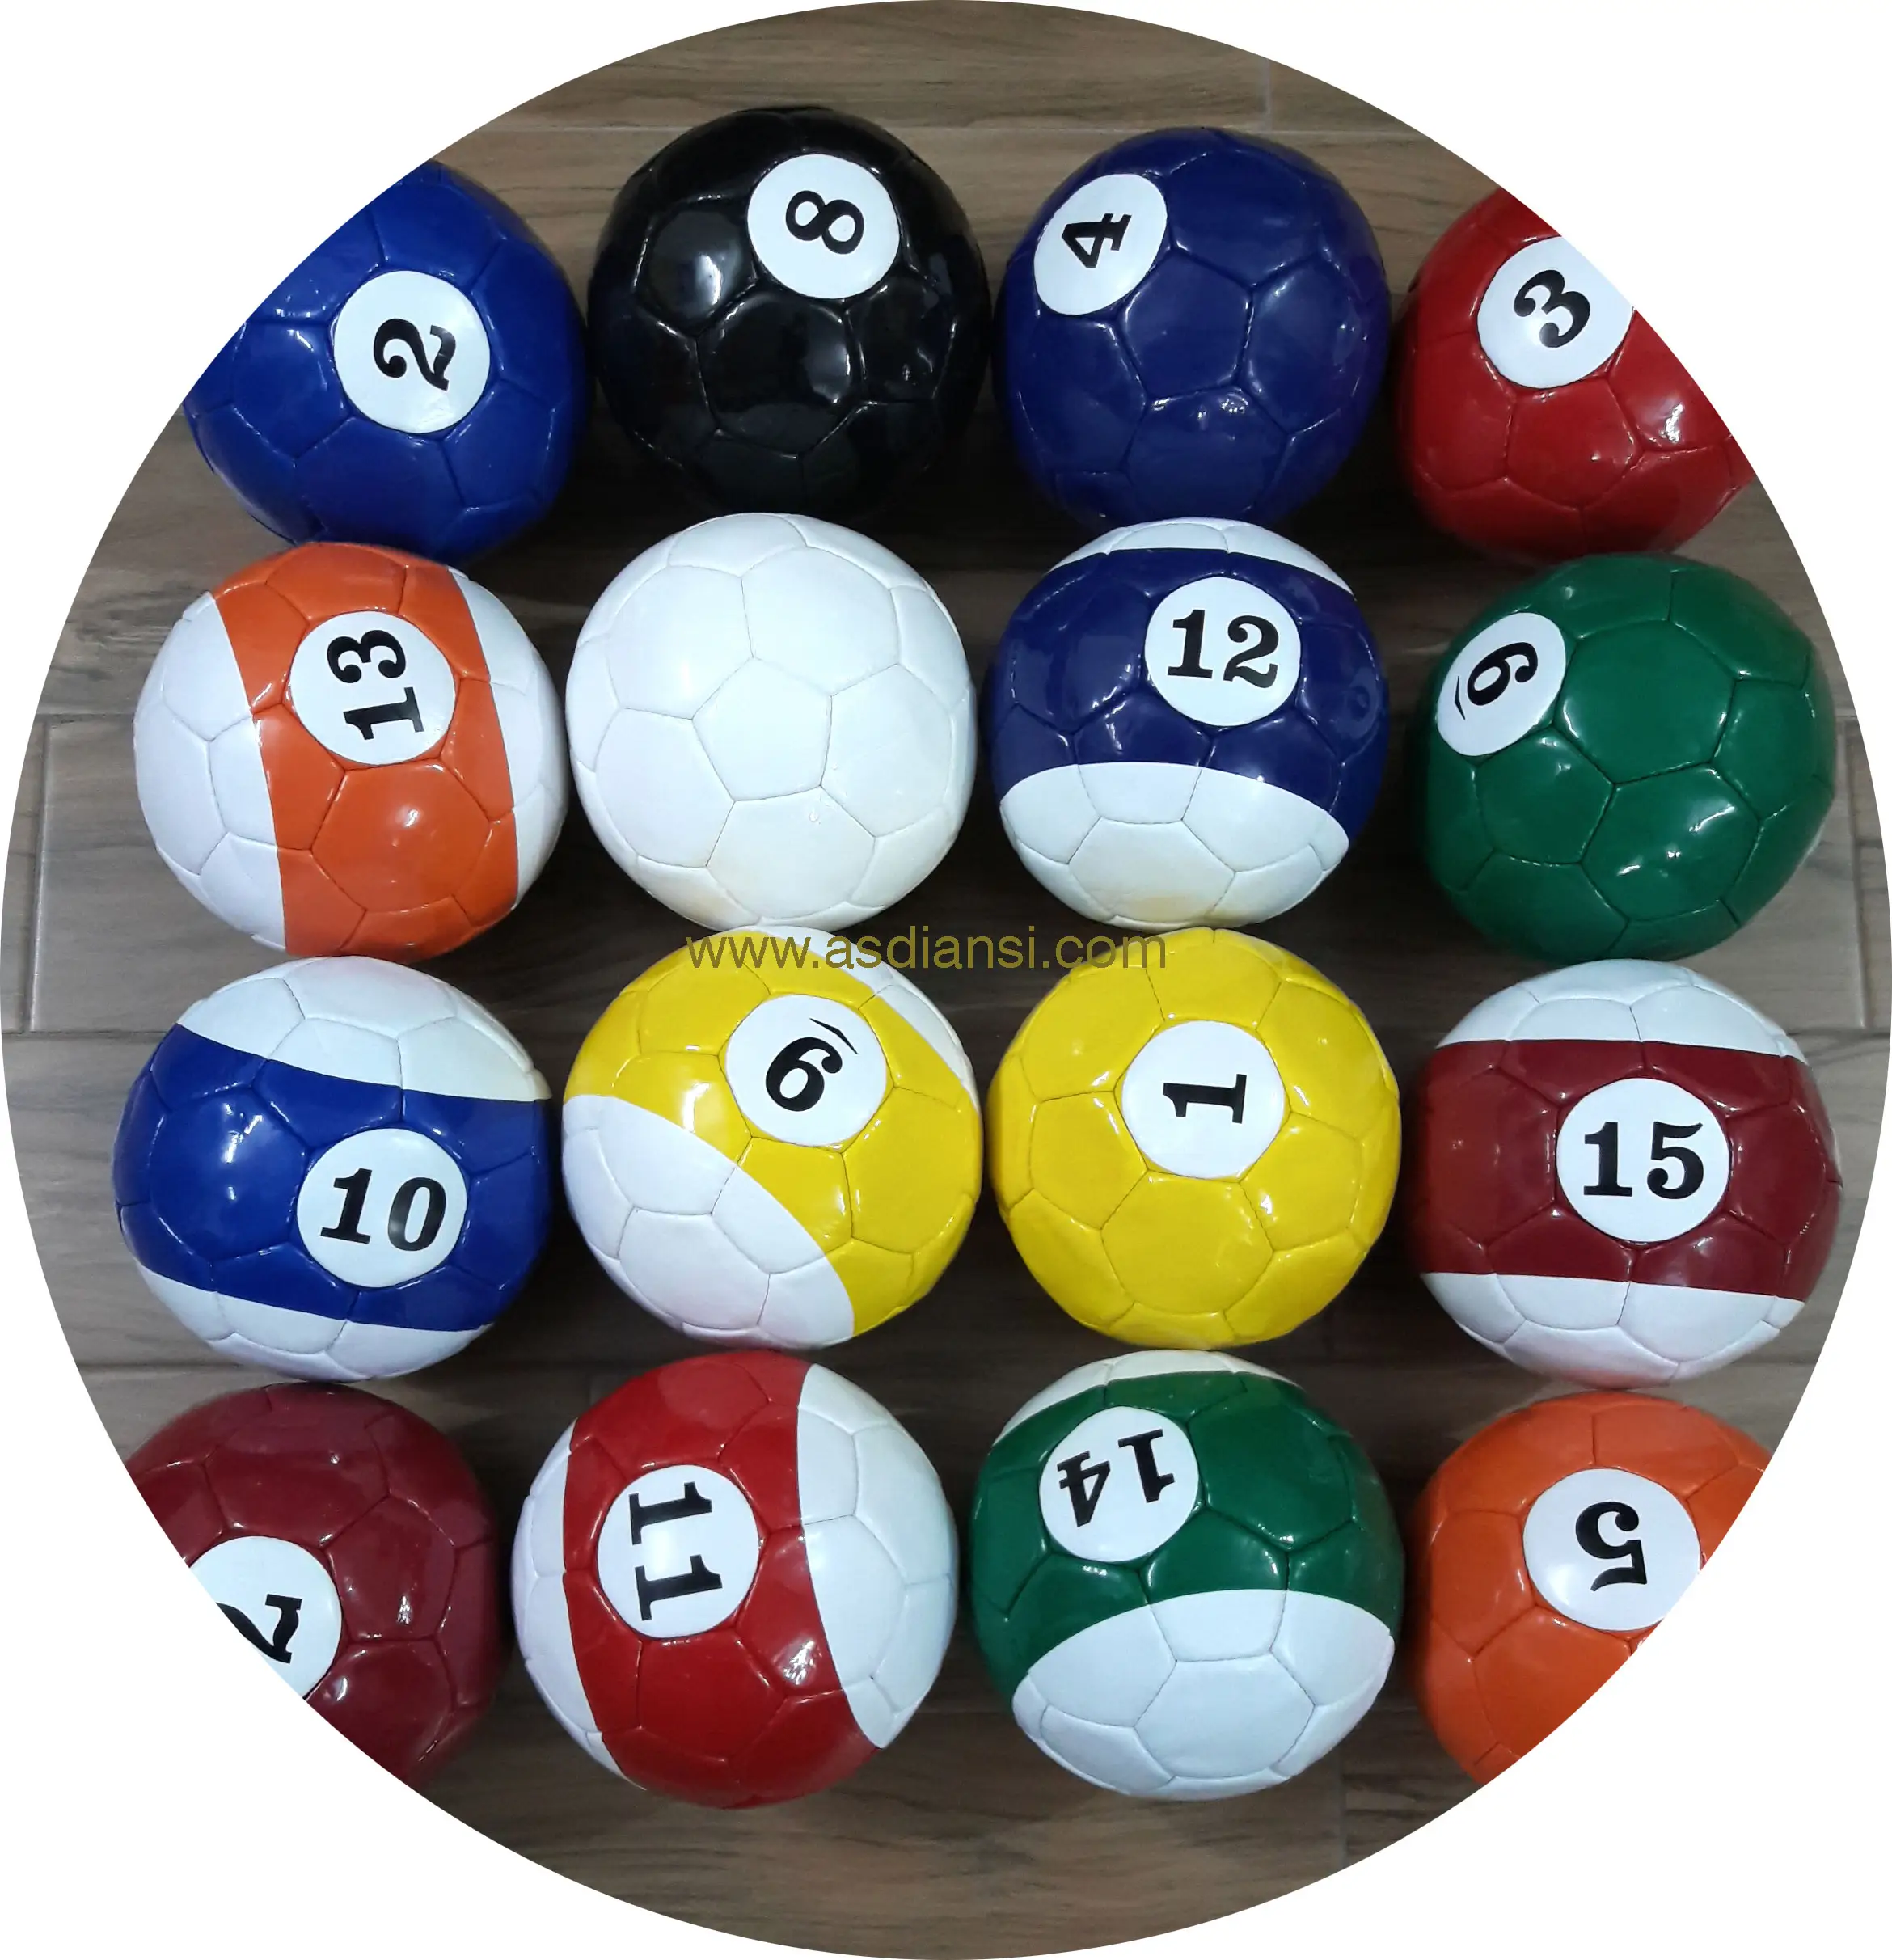 Set Lengkap Bola Billiard Snookball Sepak Bola